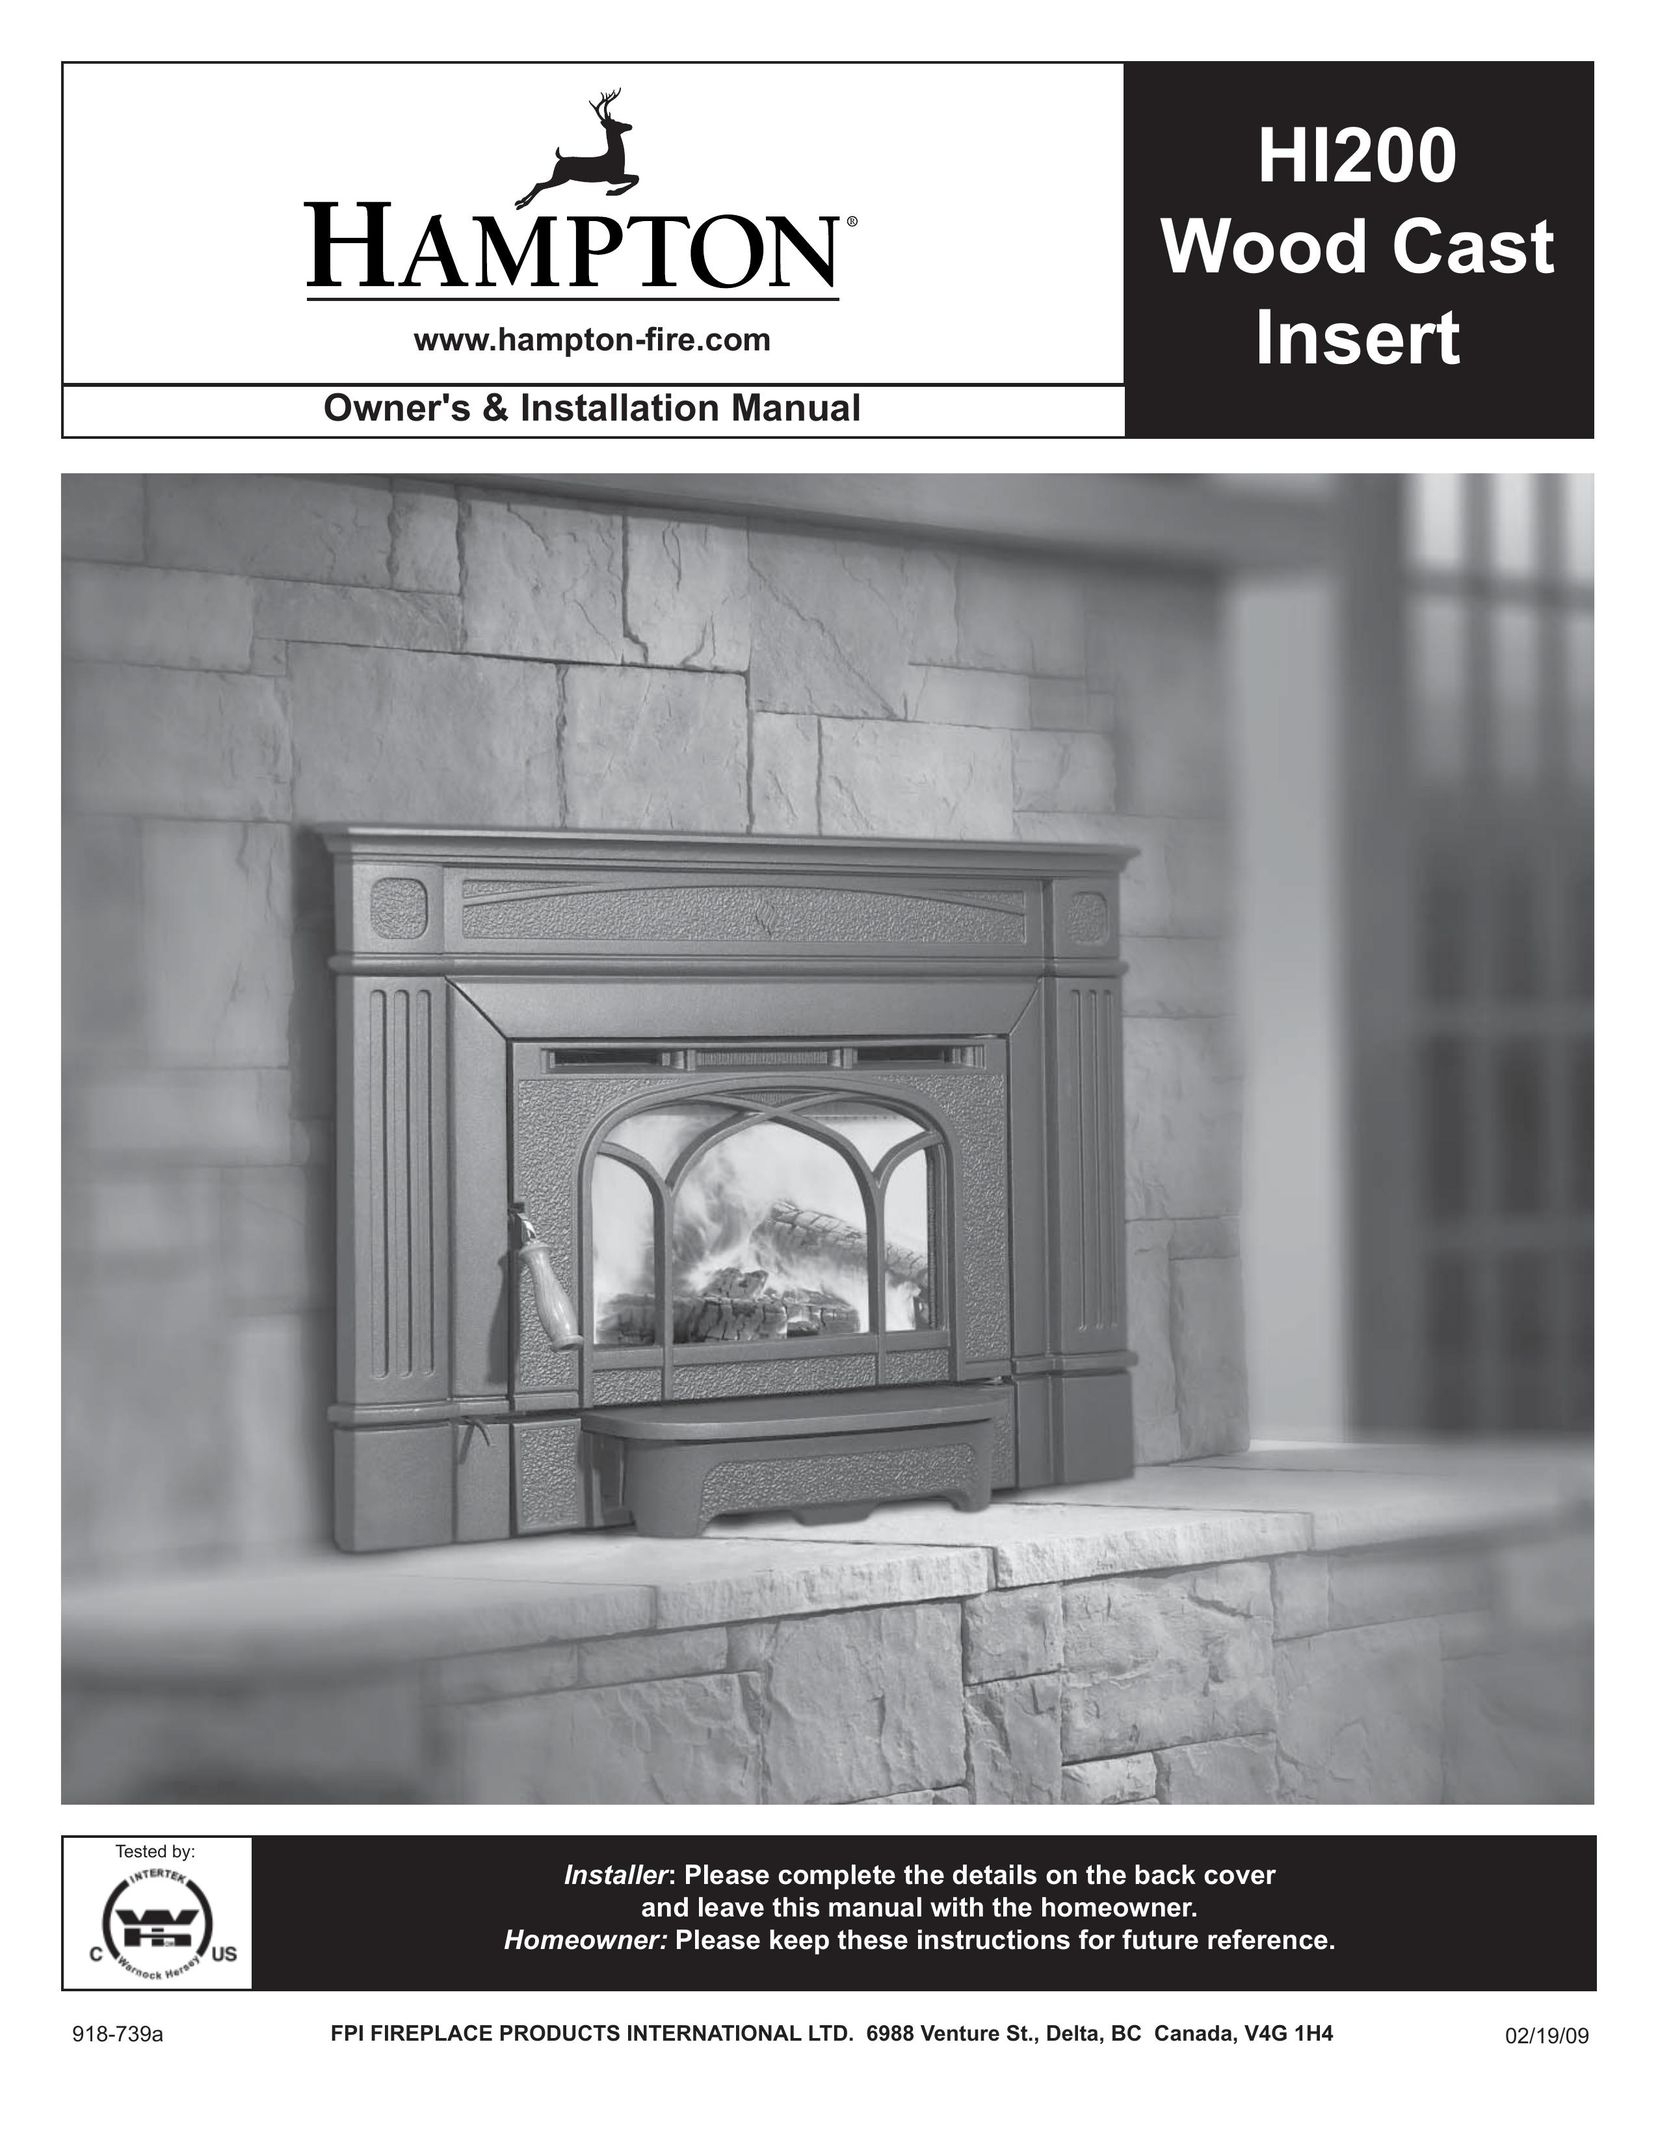 Hampton Direct HI200 Indoor Fireplace User Manual